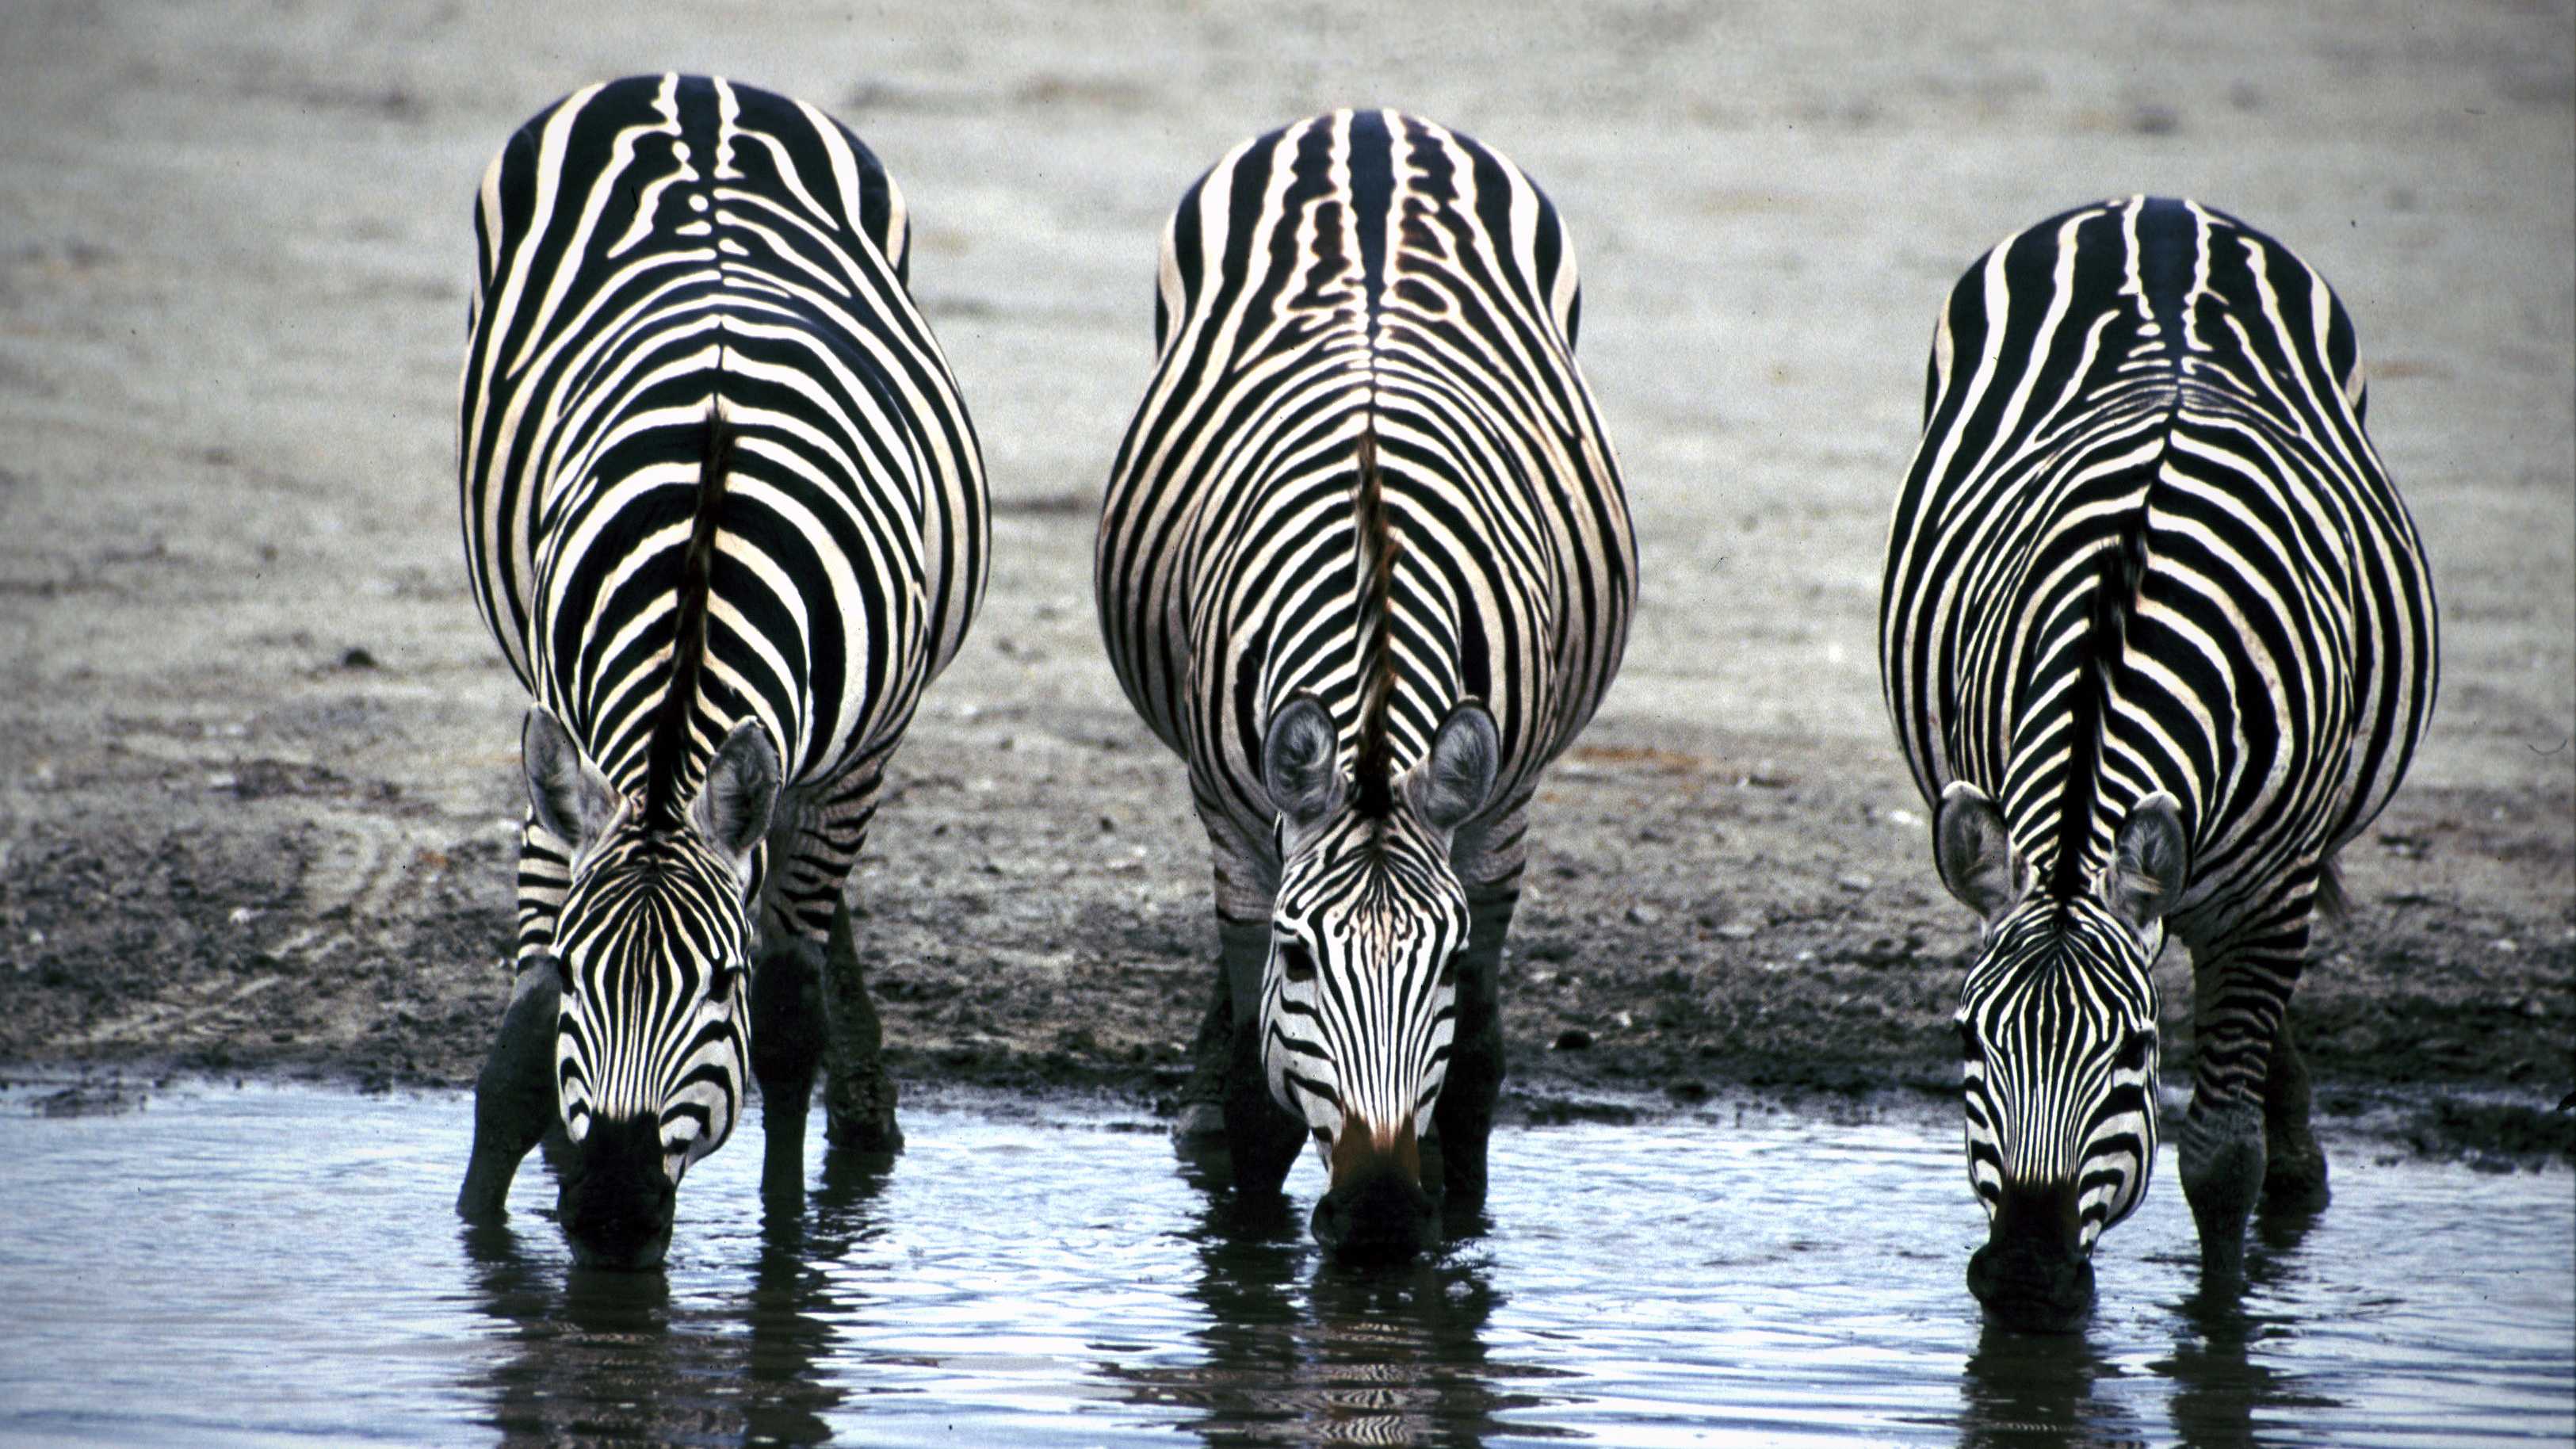 Биологи выяснили, как именно полоски защищают зебр от слепней